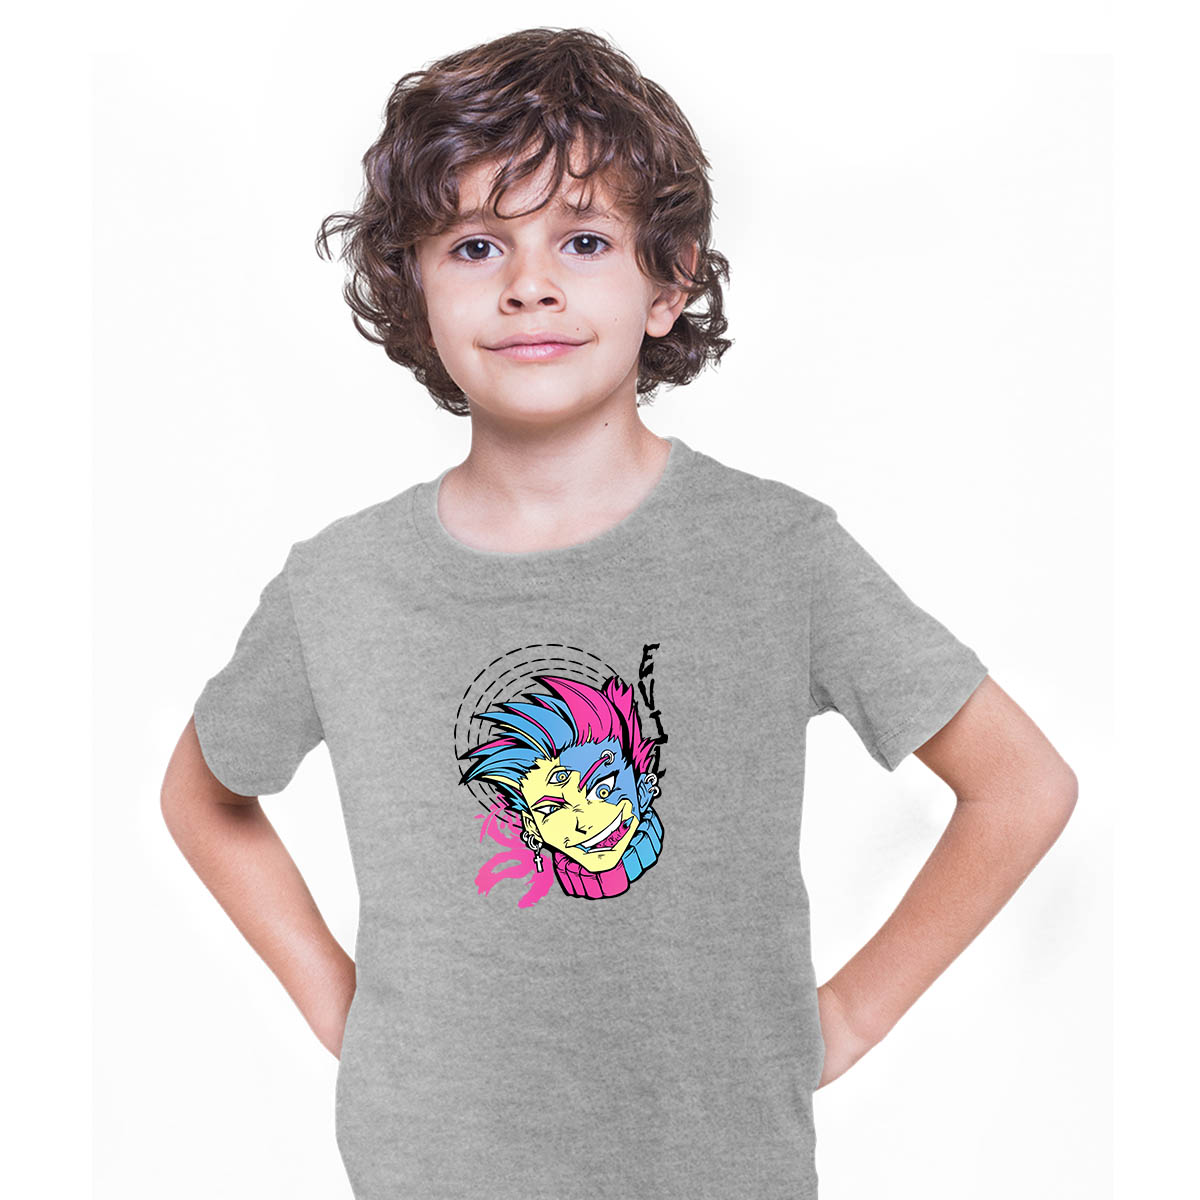 Yokai Funny Evil Anime Boy With Three Eyes Japanese Anime Manga Grey T-shirt for Kids